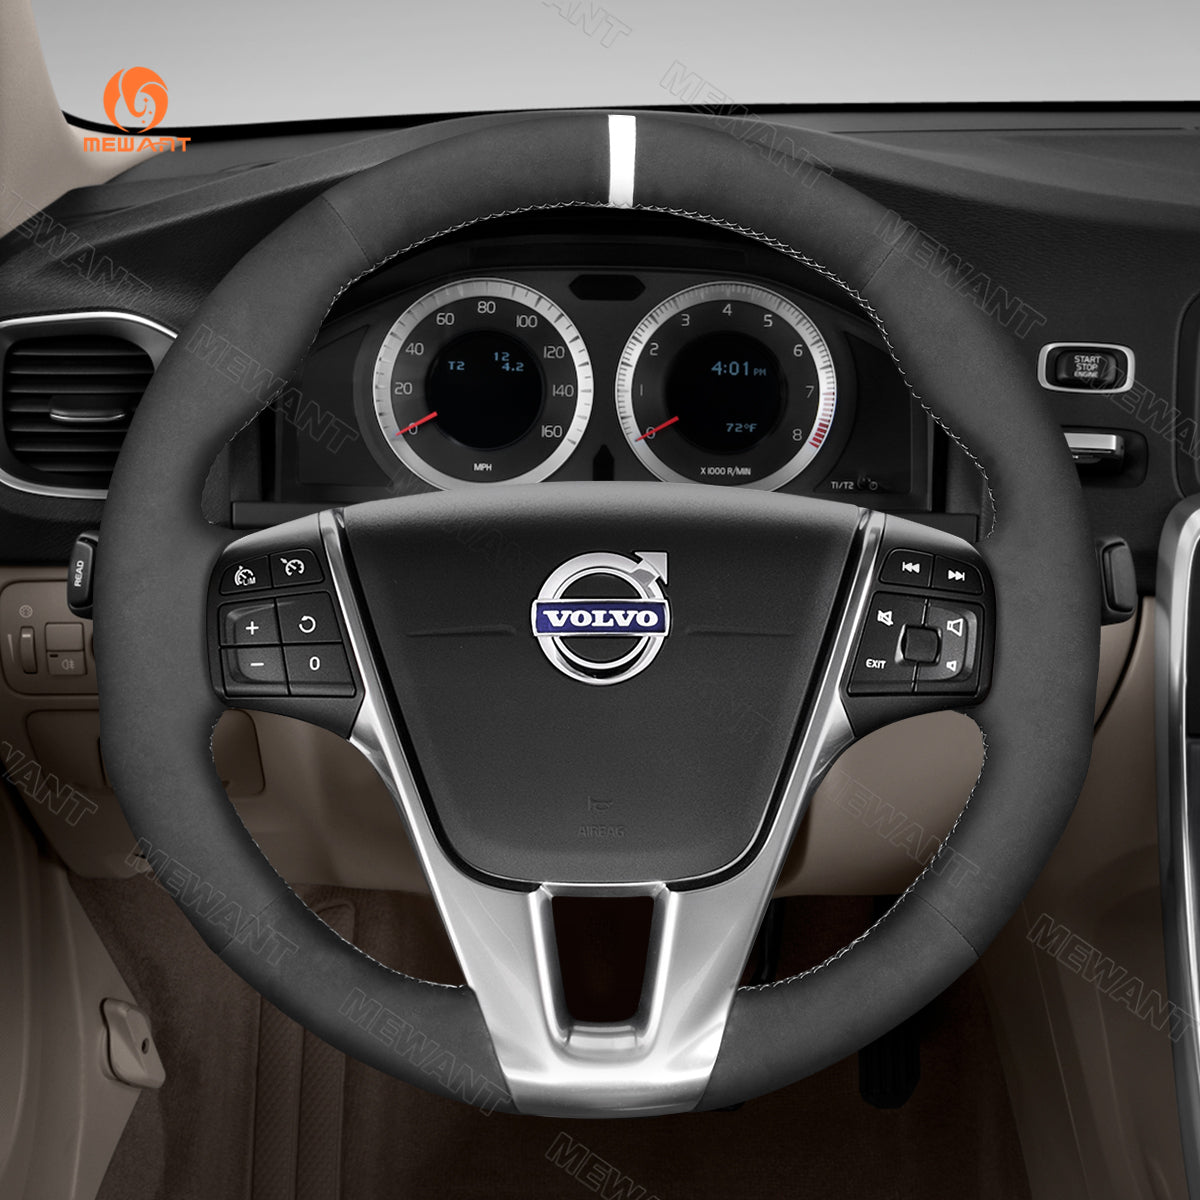 MEWANT Hand Stitch Black Suede Car Steering Wheel Cover for Volvo S60 / V40 / V60 / V70 / 2014 XC60